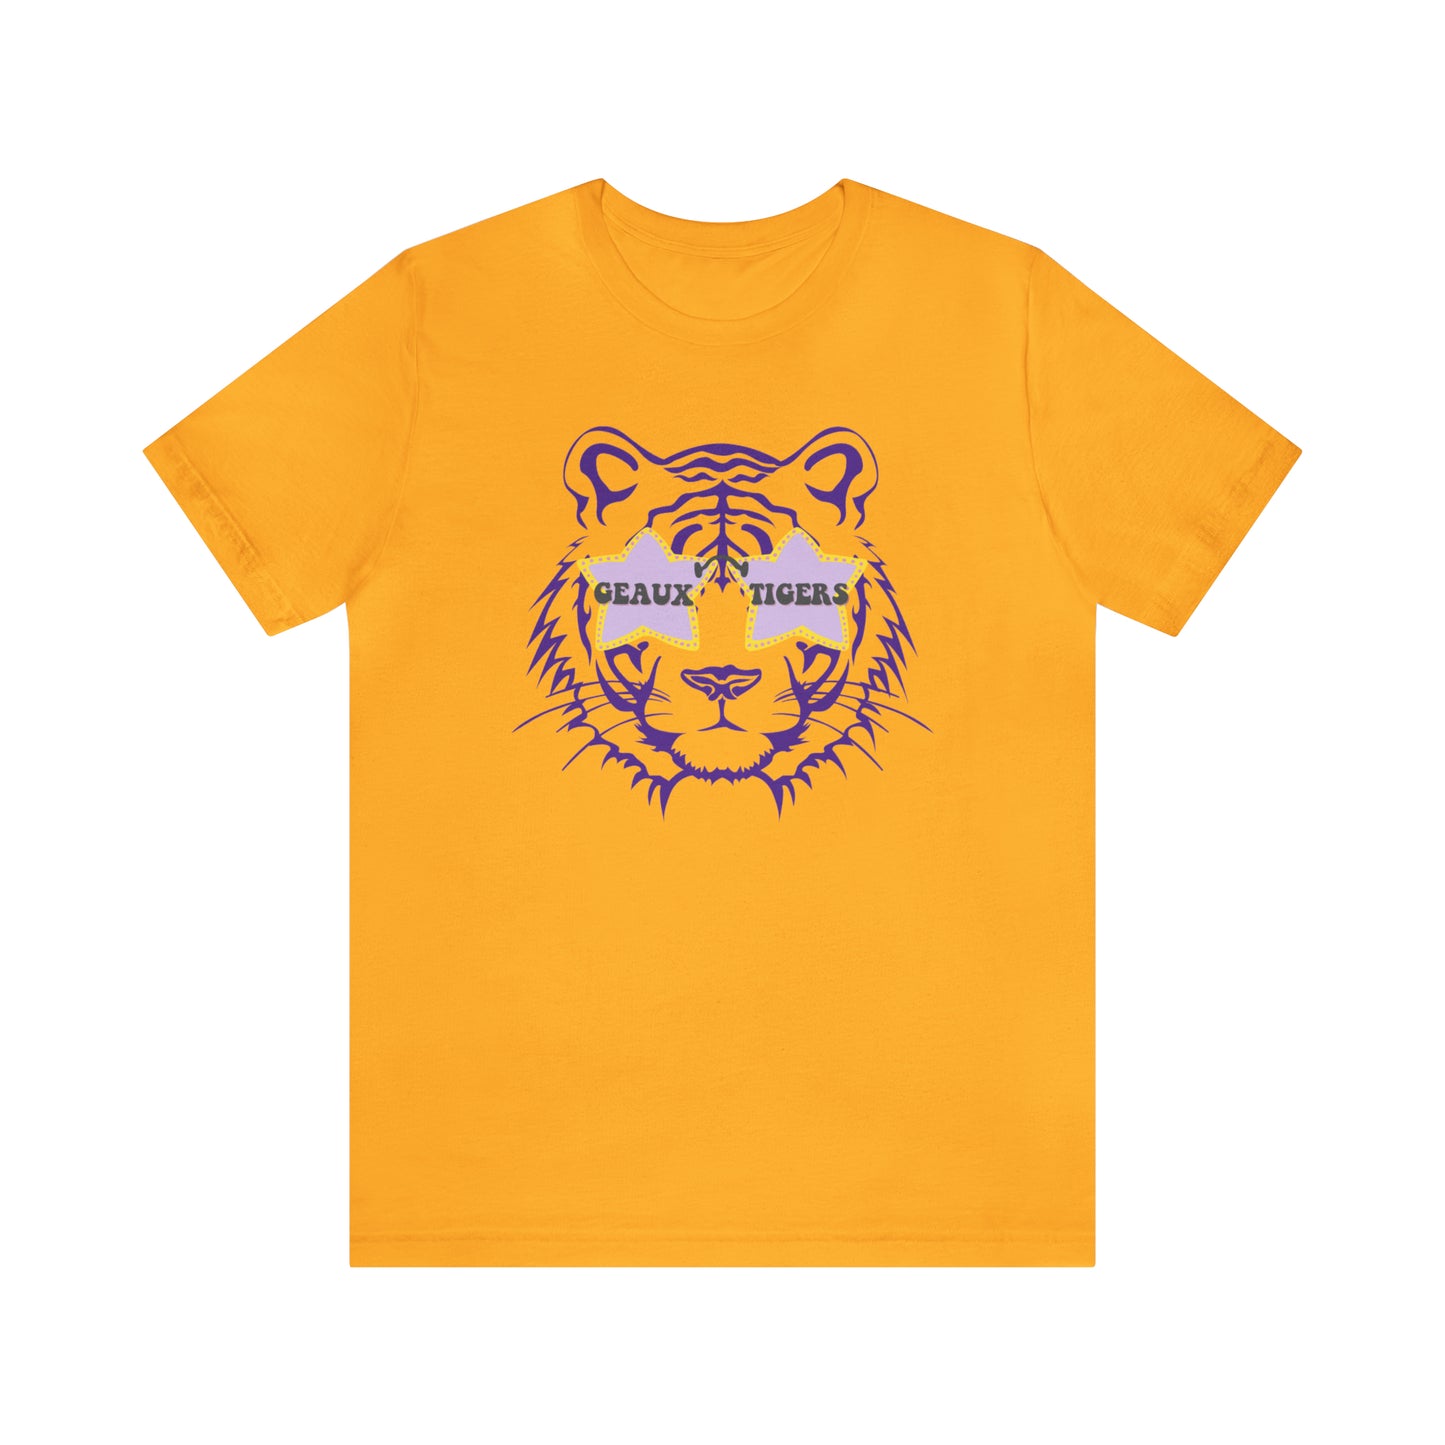 Geaux Tigers Bella Canvas Shirt